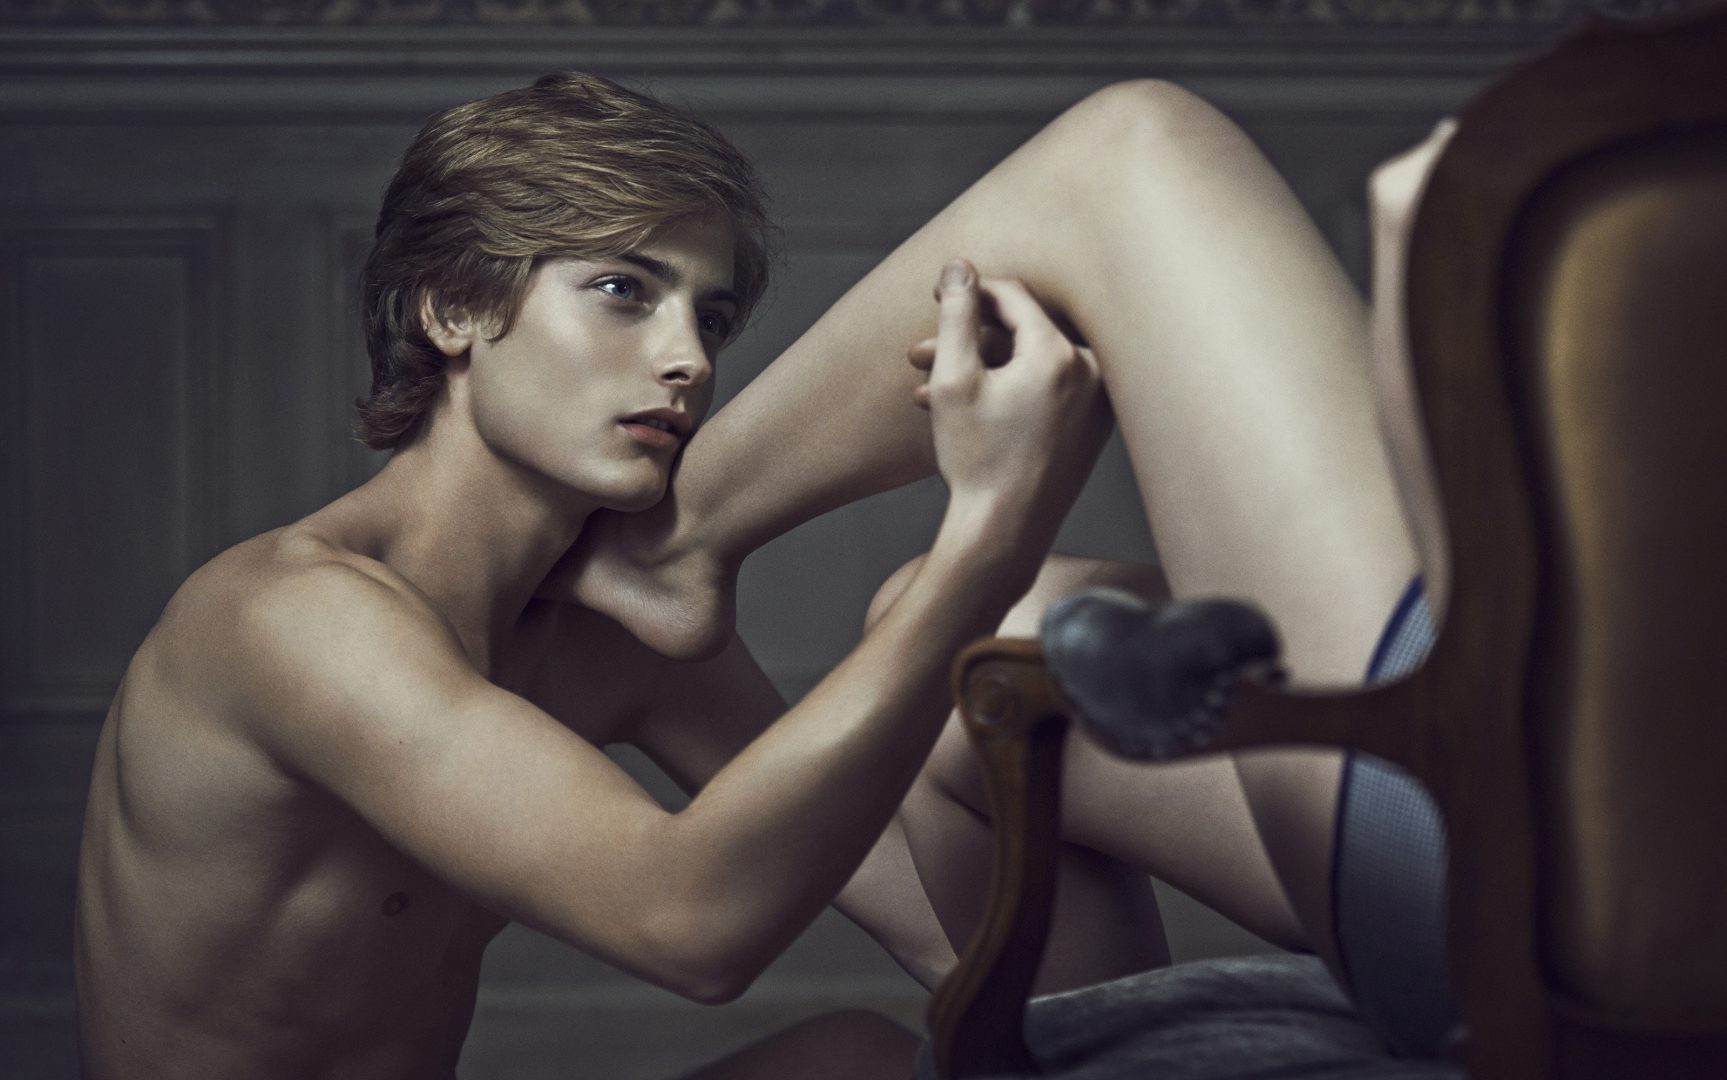 Boy caress girls leg by Stefan Rappo